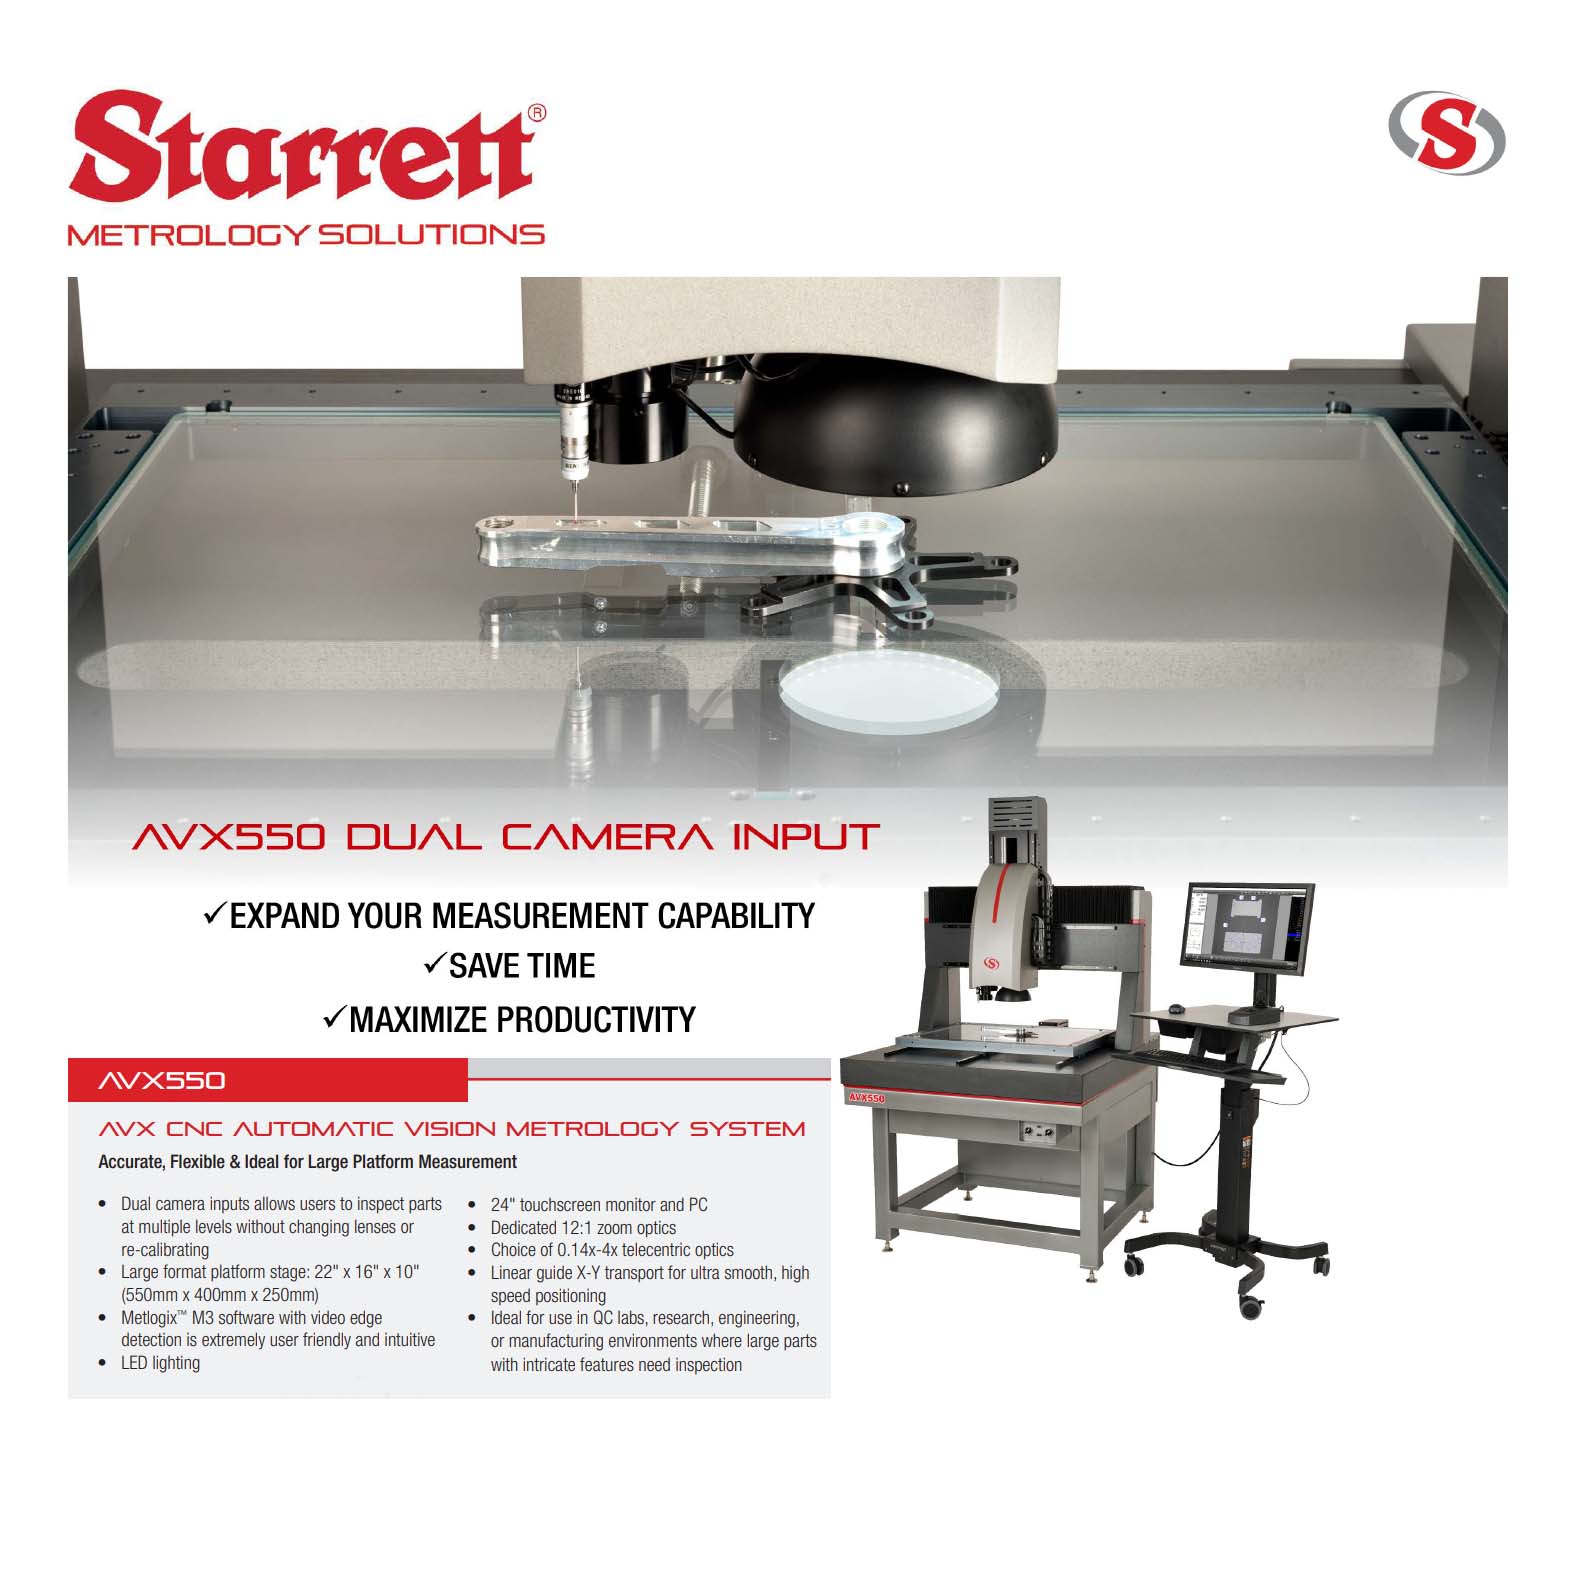 Starrett - AVX550 Dual Camera Input